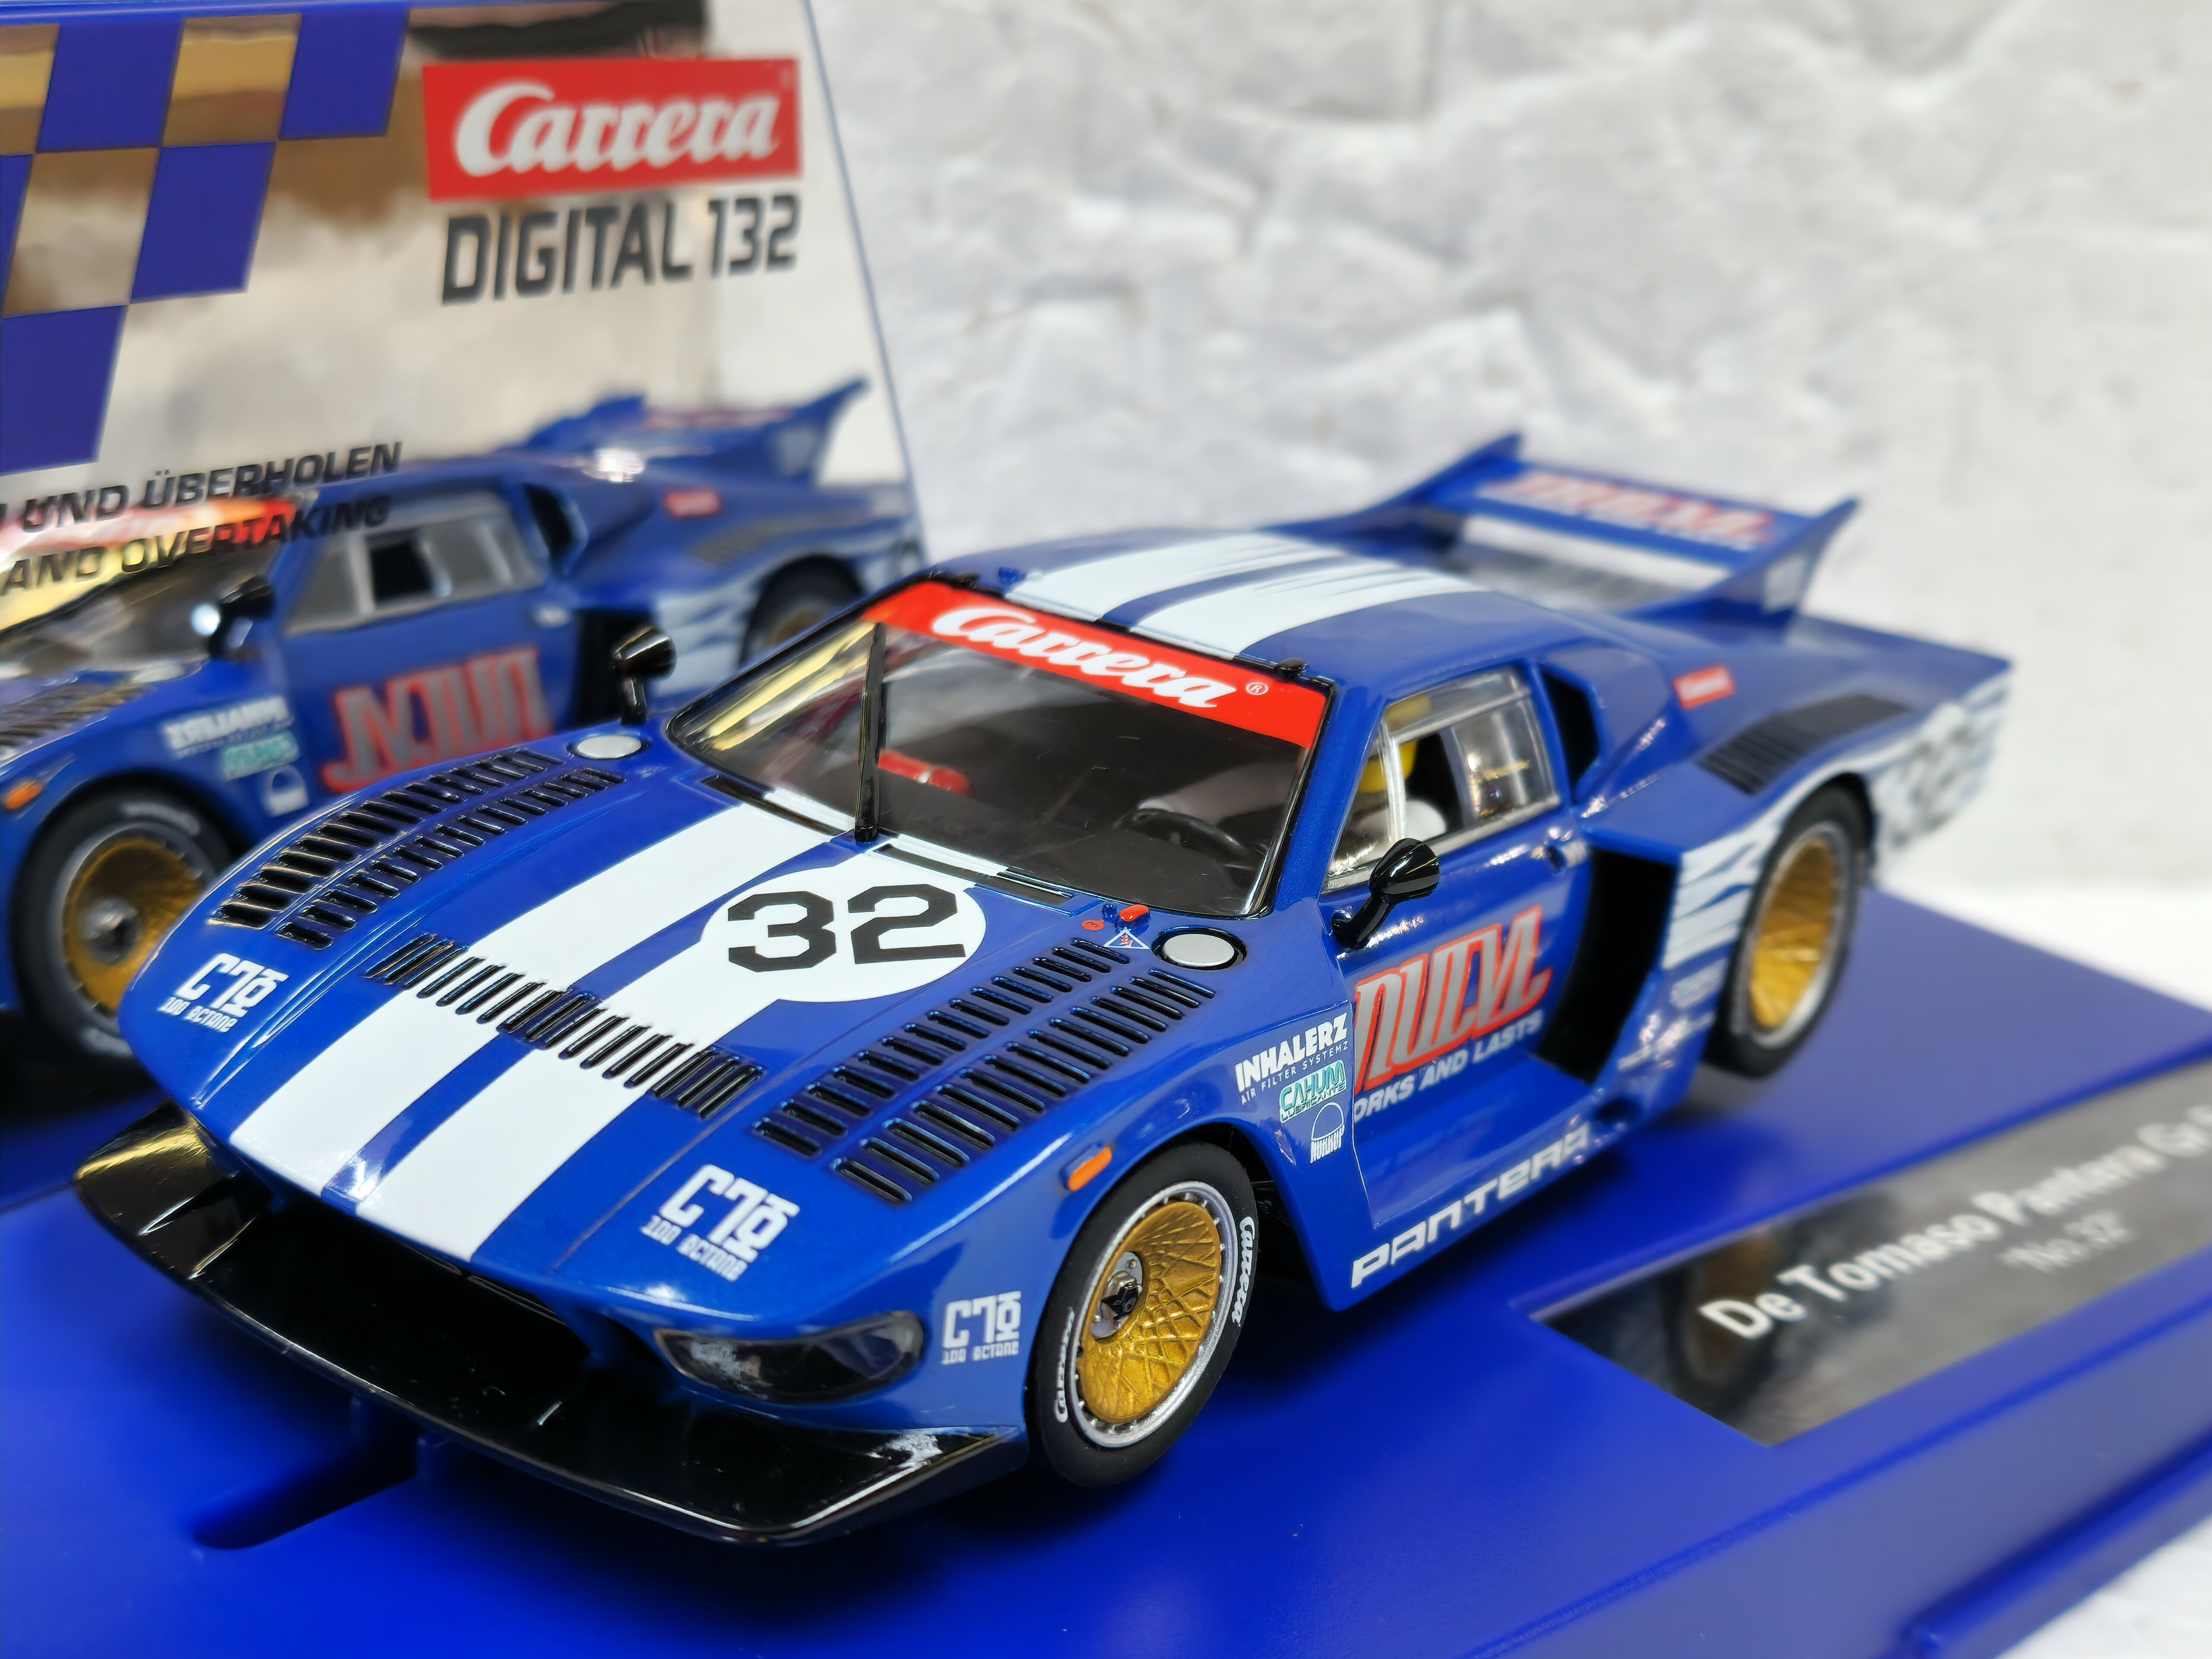 Carrera 31044 De Tomaso Pantera No.7 1:32 Scale Digital Slot Car Racing  Vehicle Digital Slot Car Race Tracks